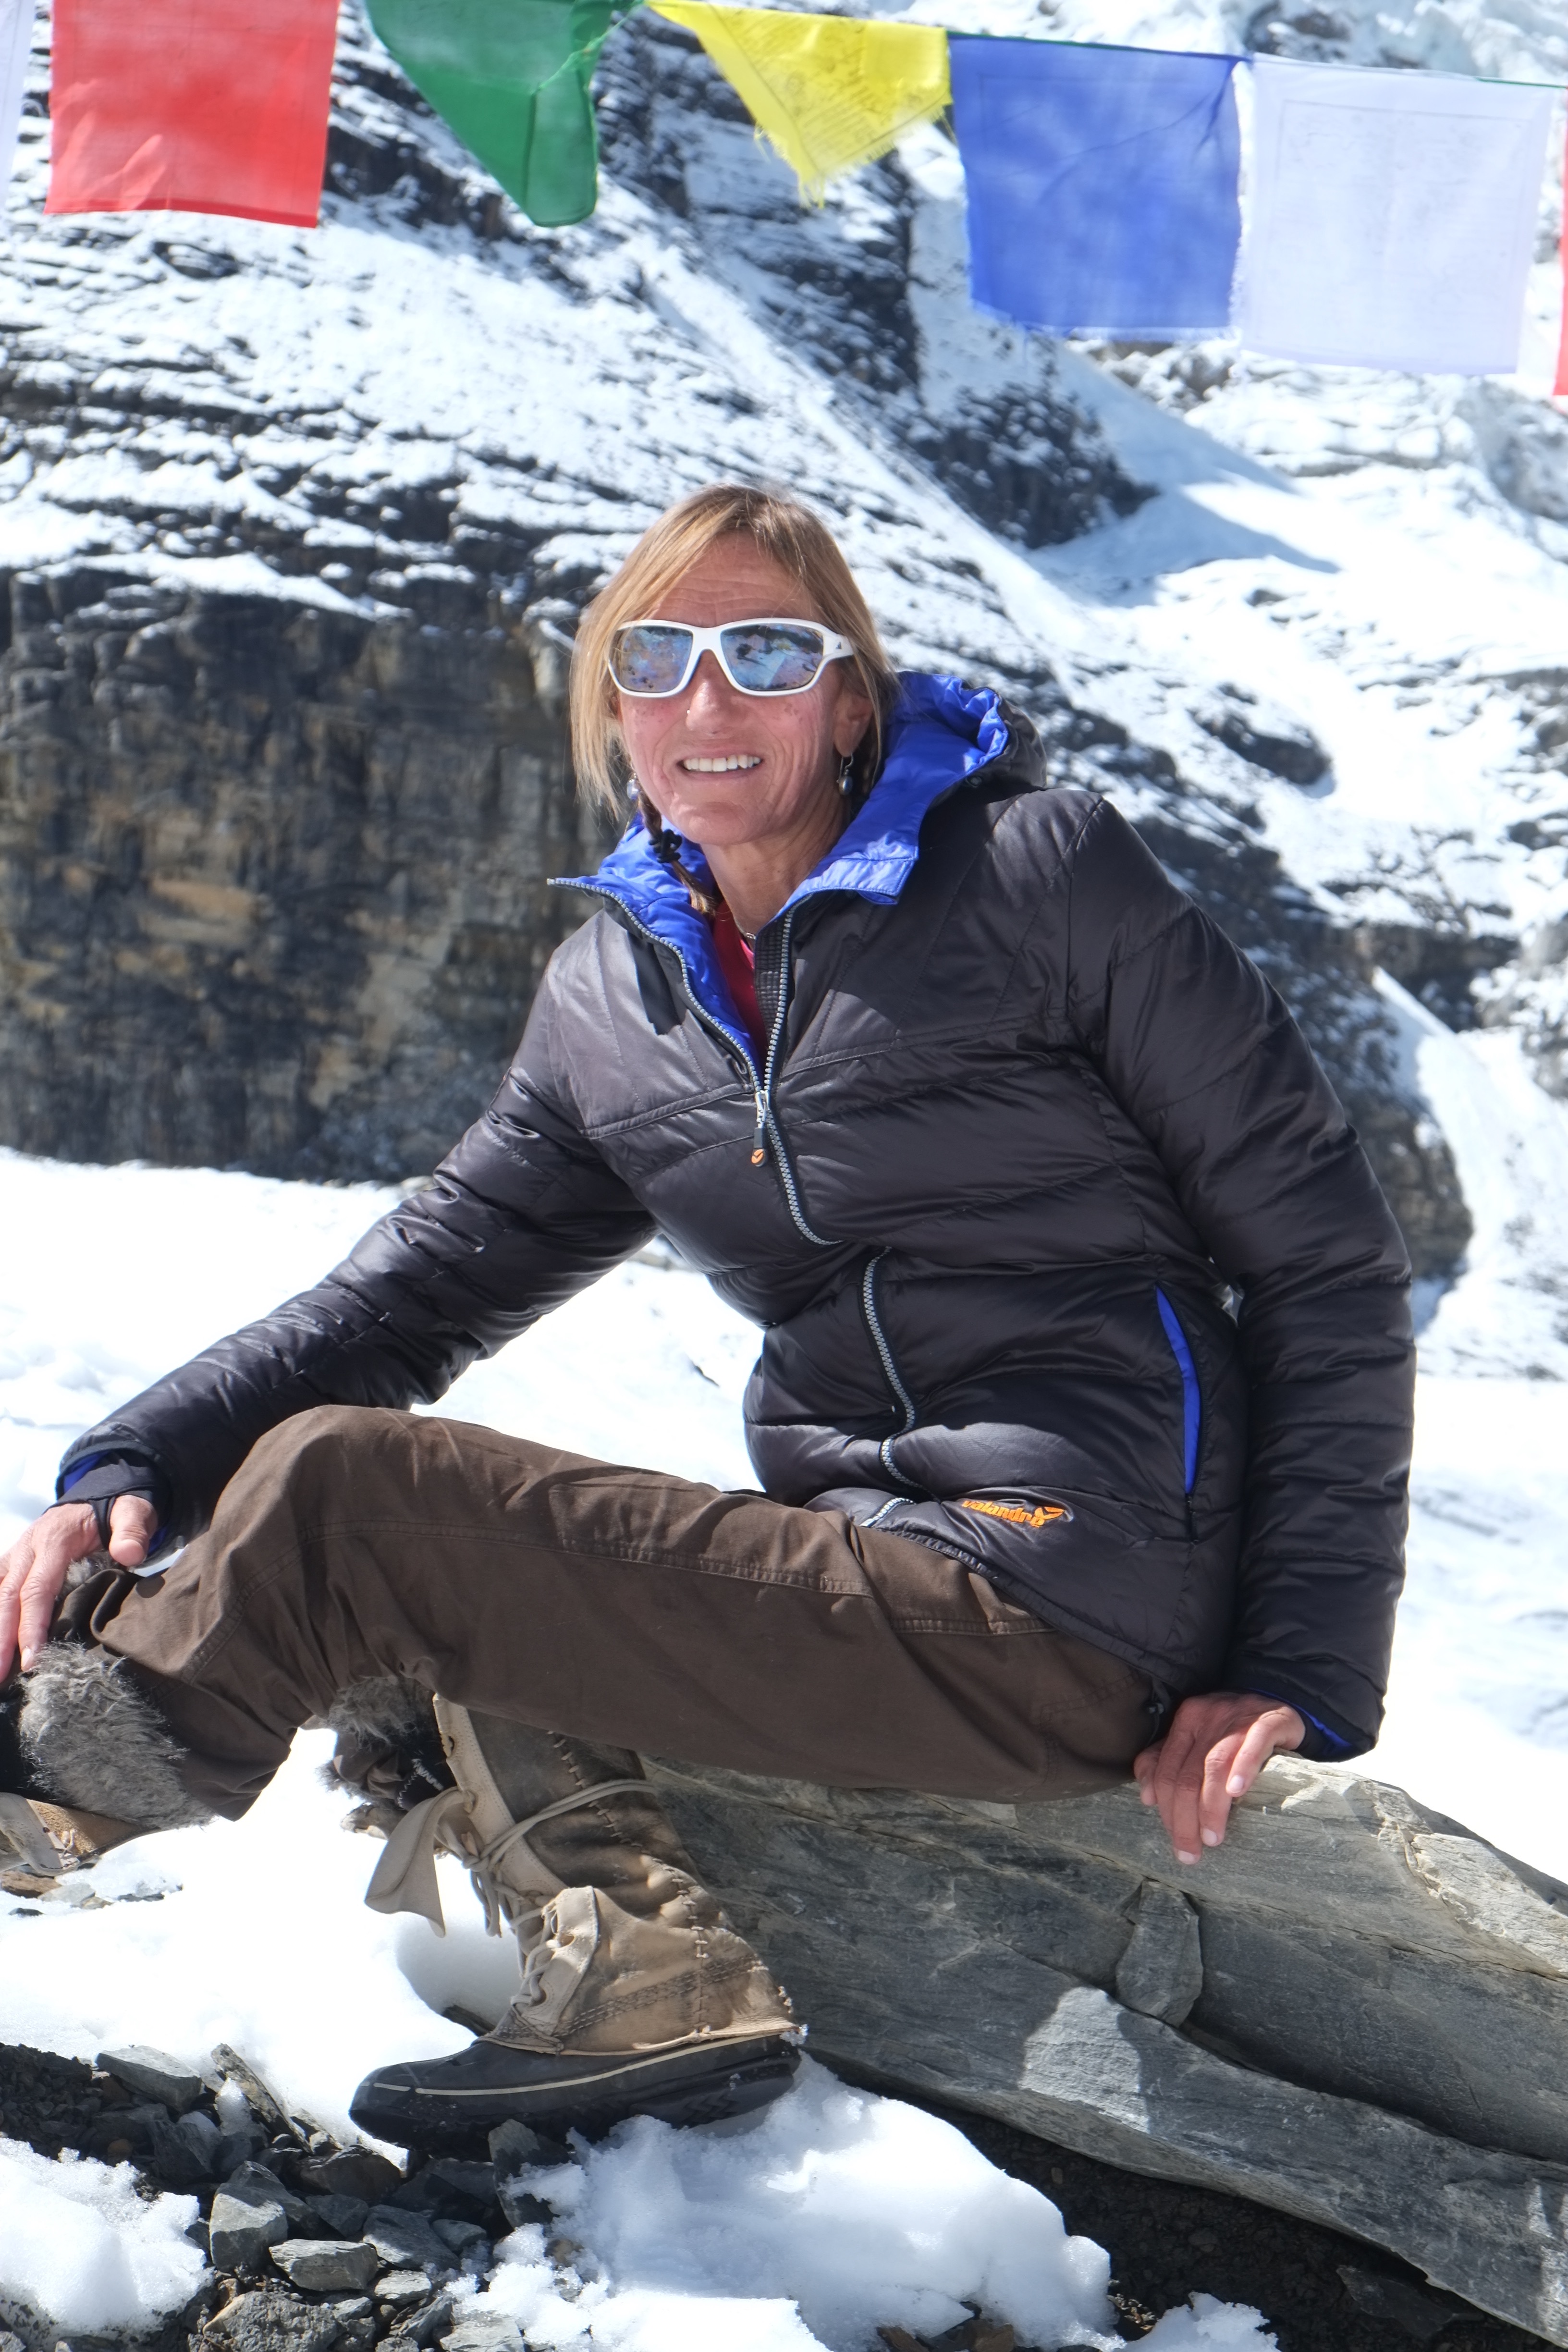 Billi Bierling has summited Manaslu twice, Everst, Lhotse and Makalu.